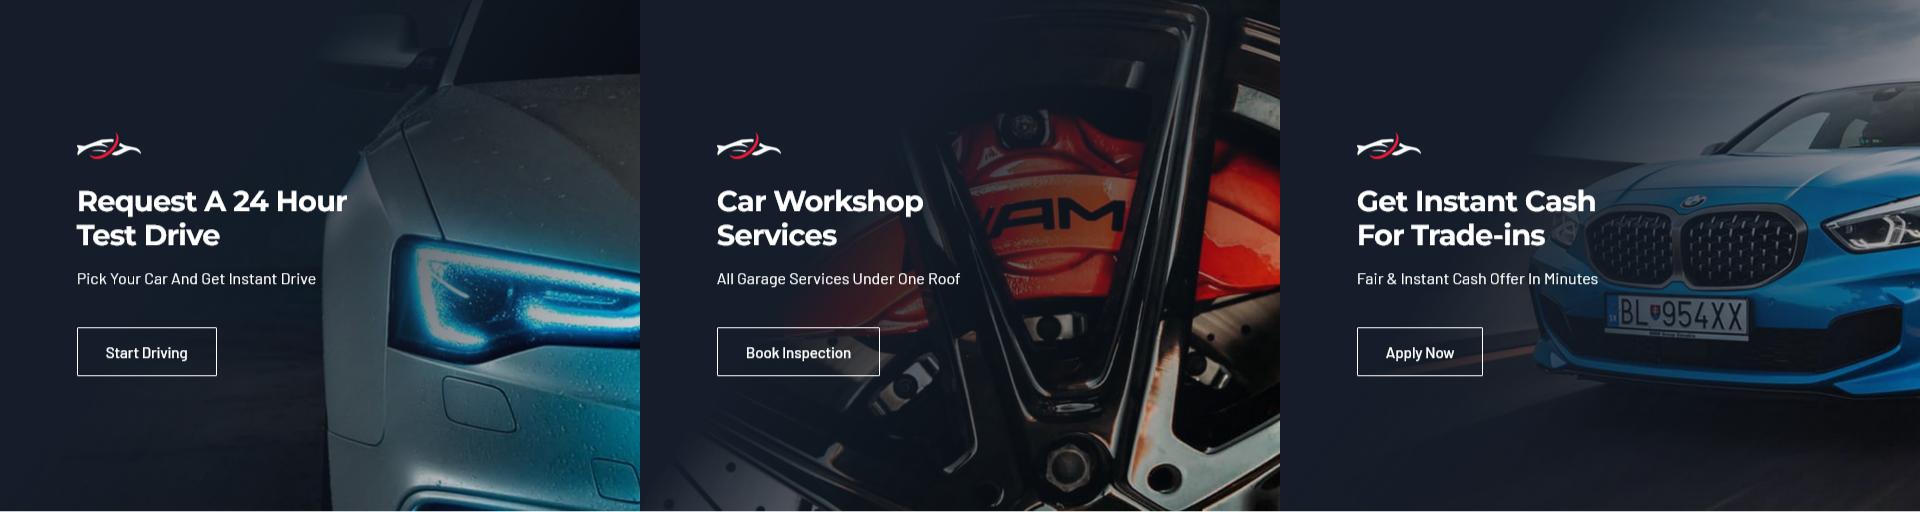 Avada Car Dealership Services Visual CTA